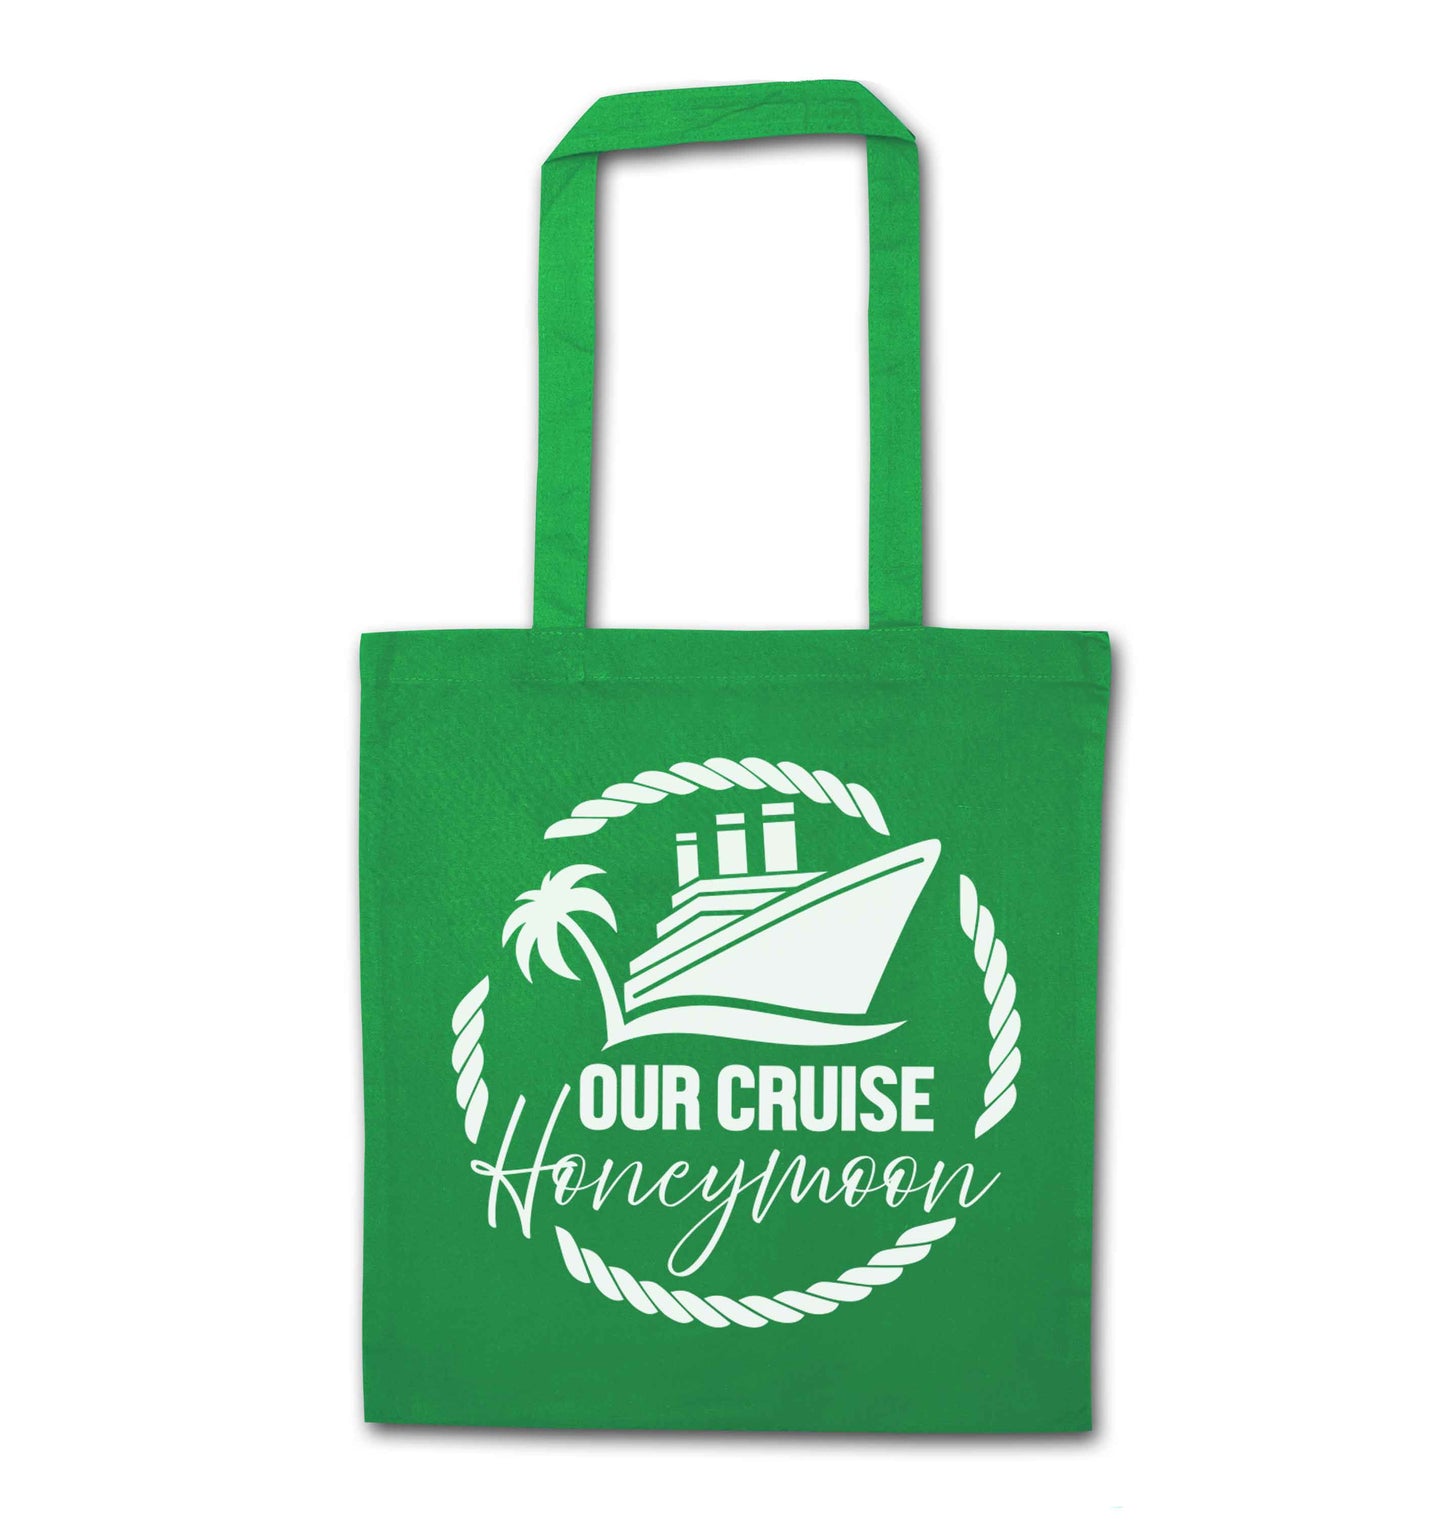 Our cruise honeymoon green tote bag